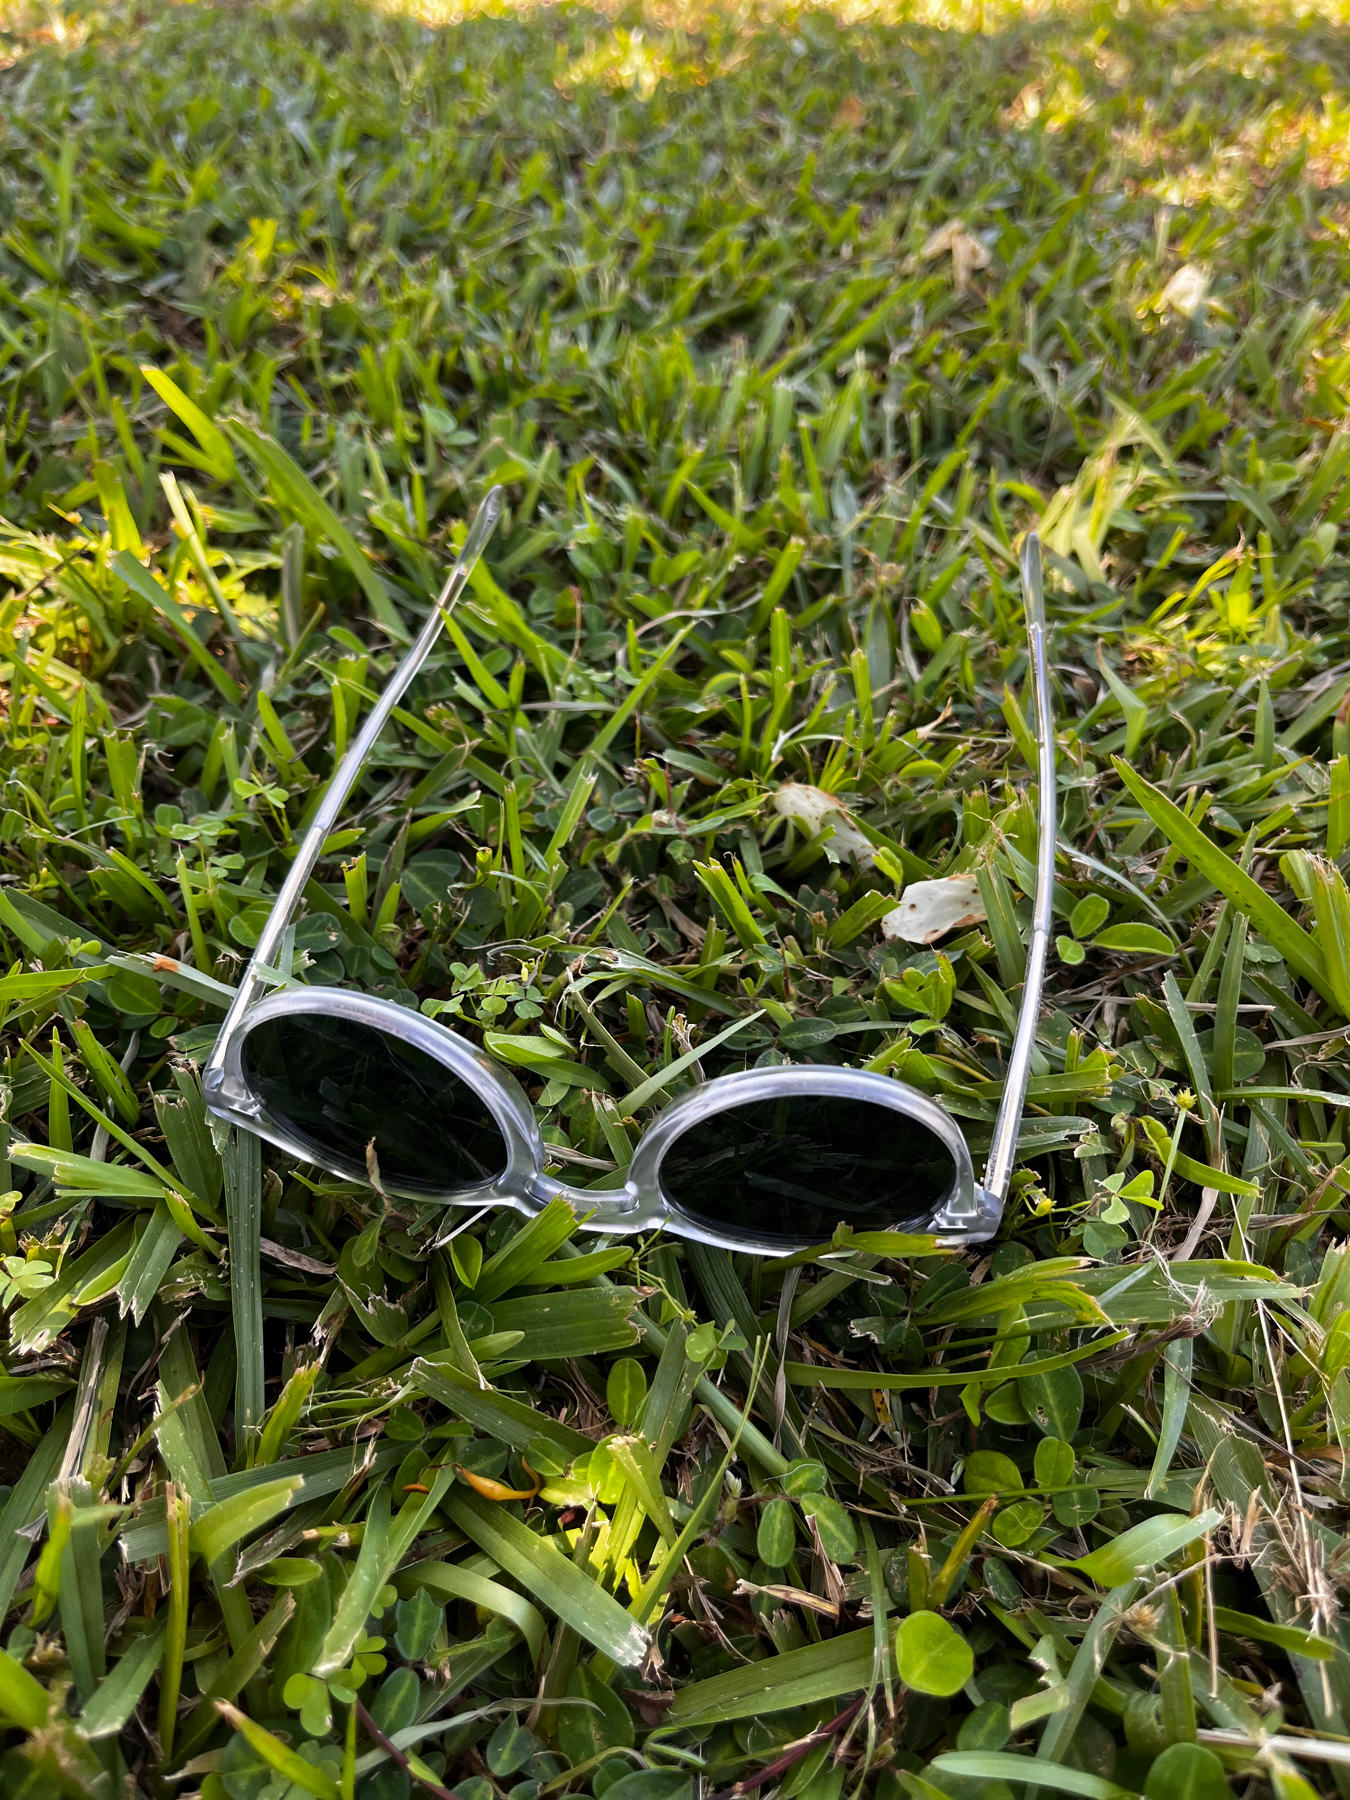 Sunglasses and shade